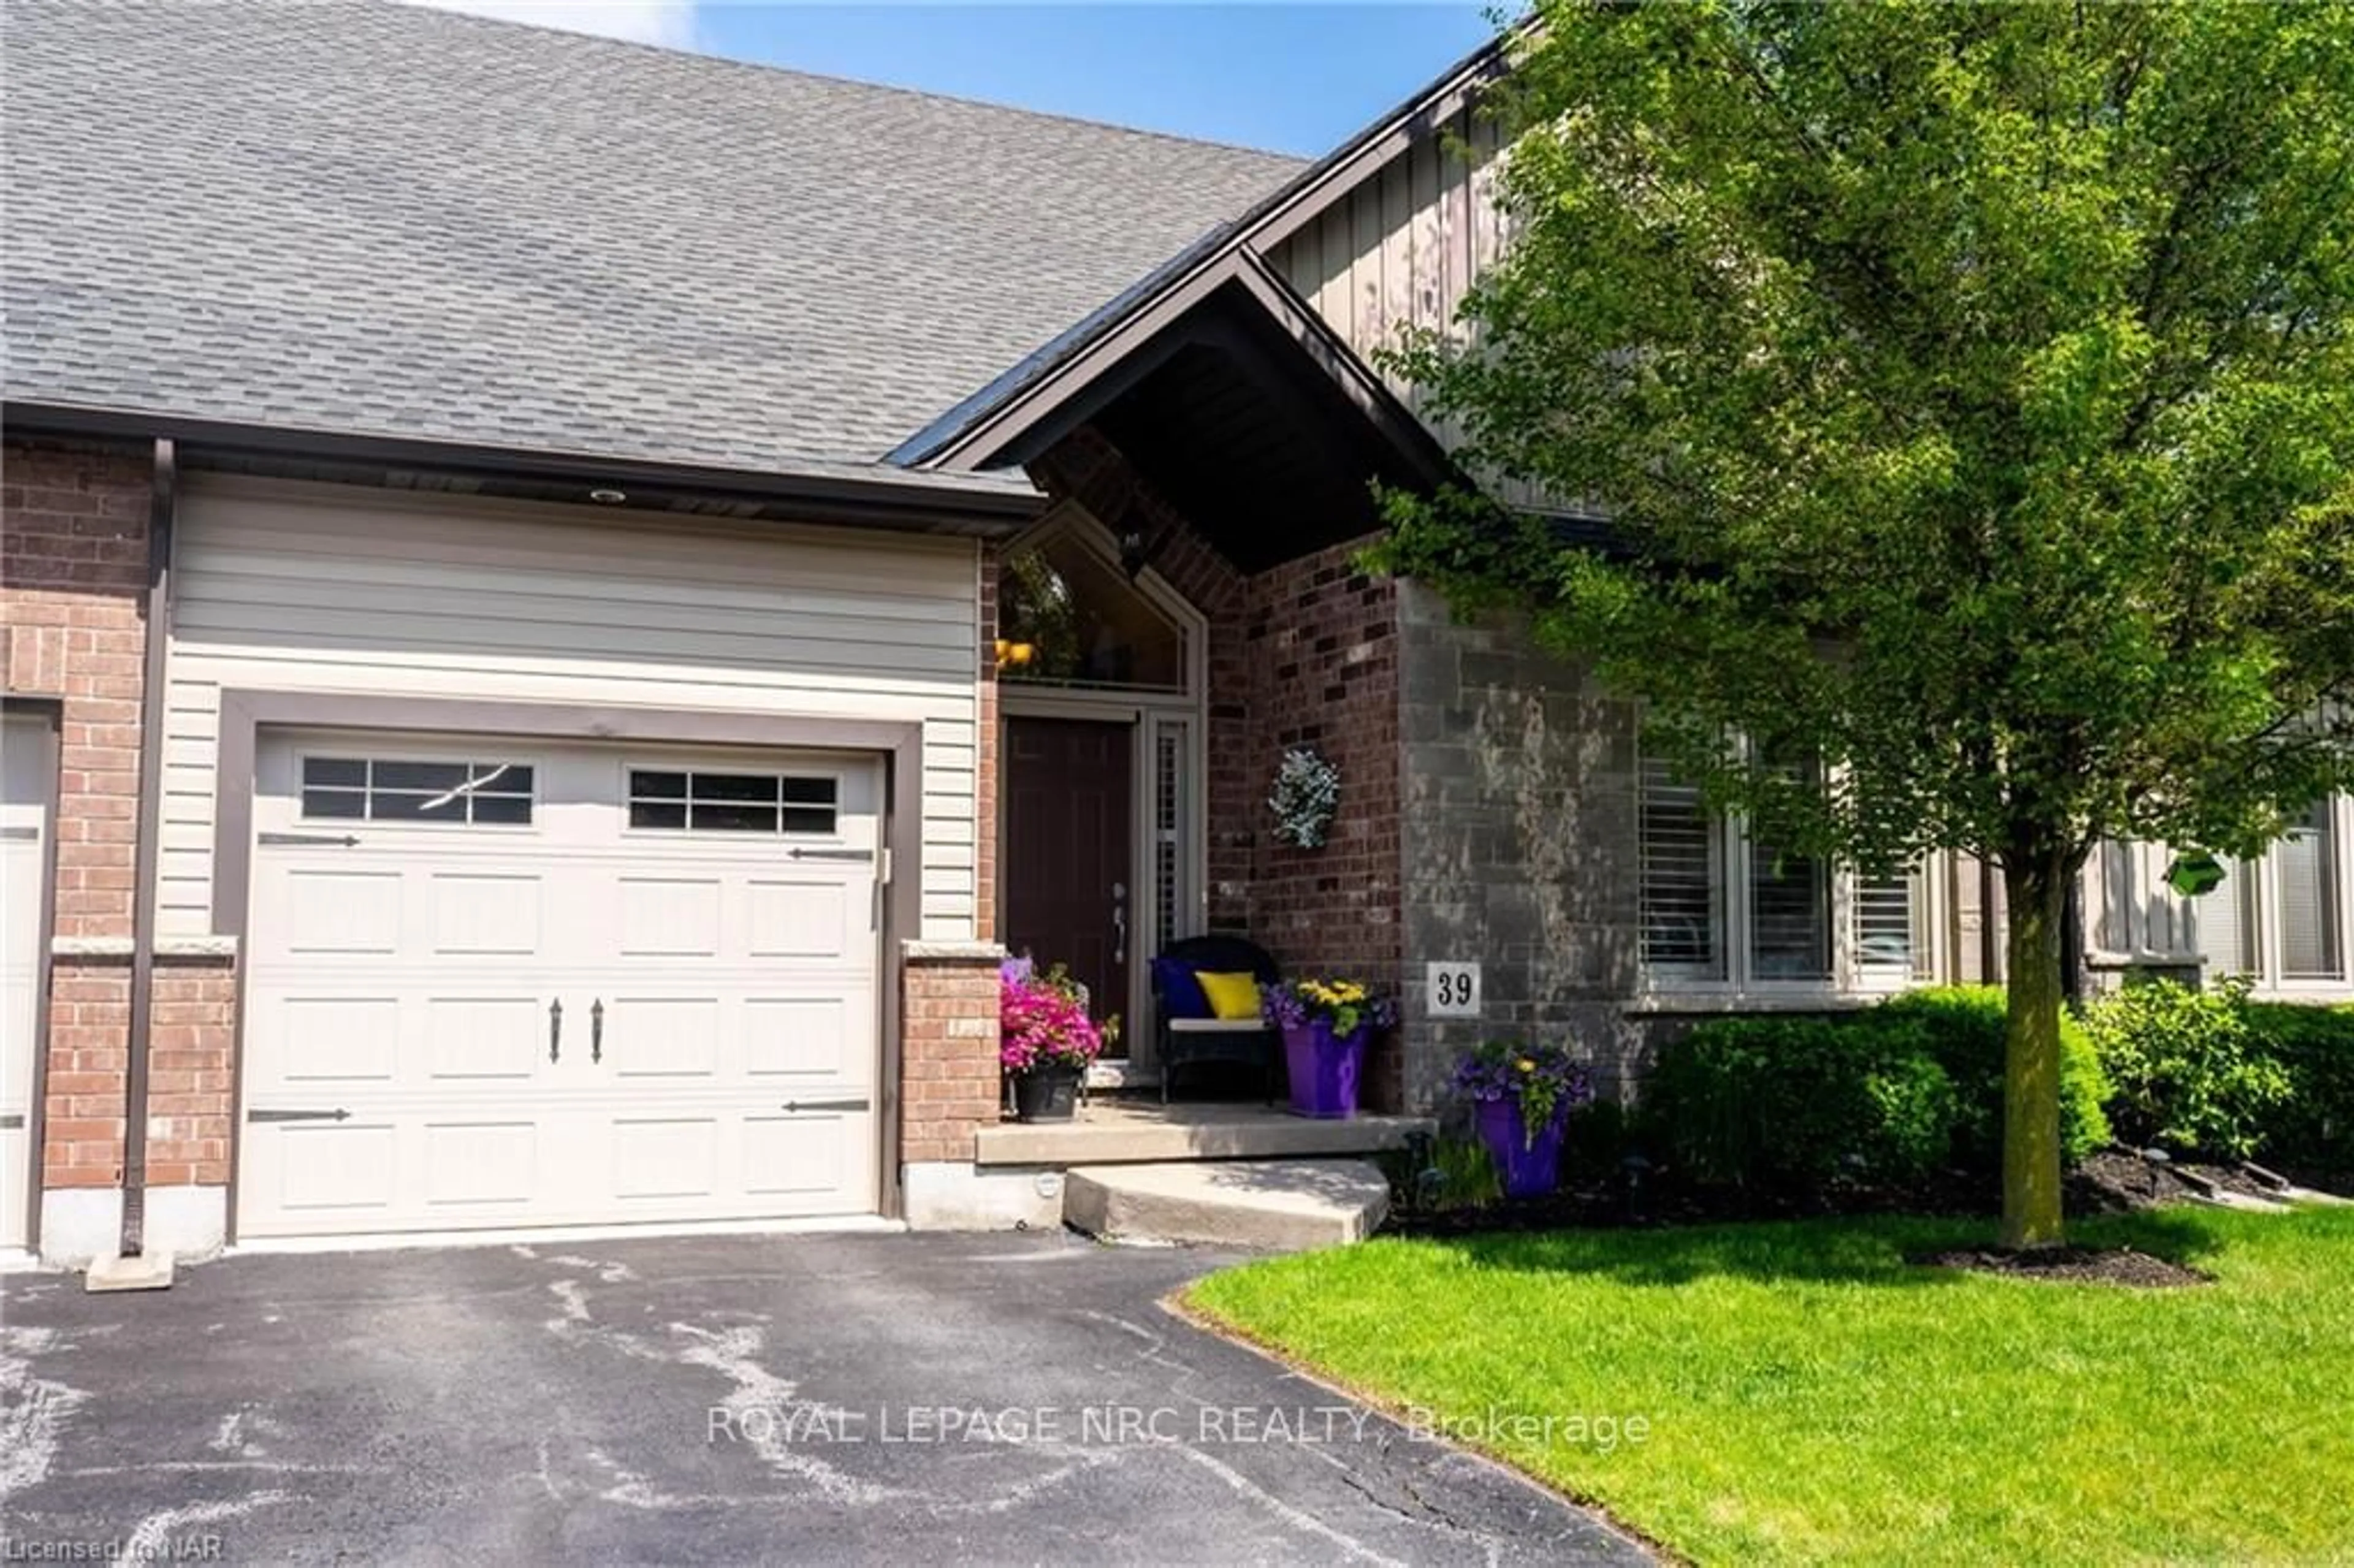 Home with brick exterior material for 9440 Eagle Ridge Rd #39, Niagara Falls Ontario L2H 0G6